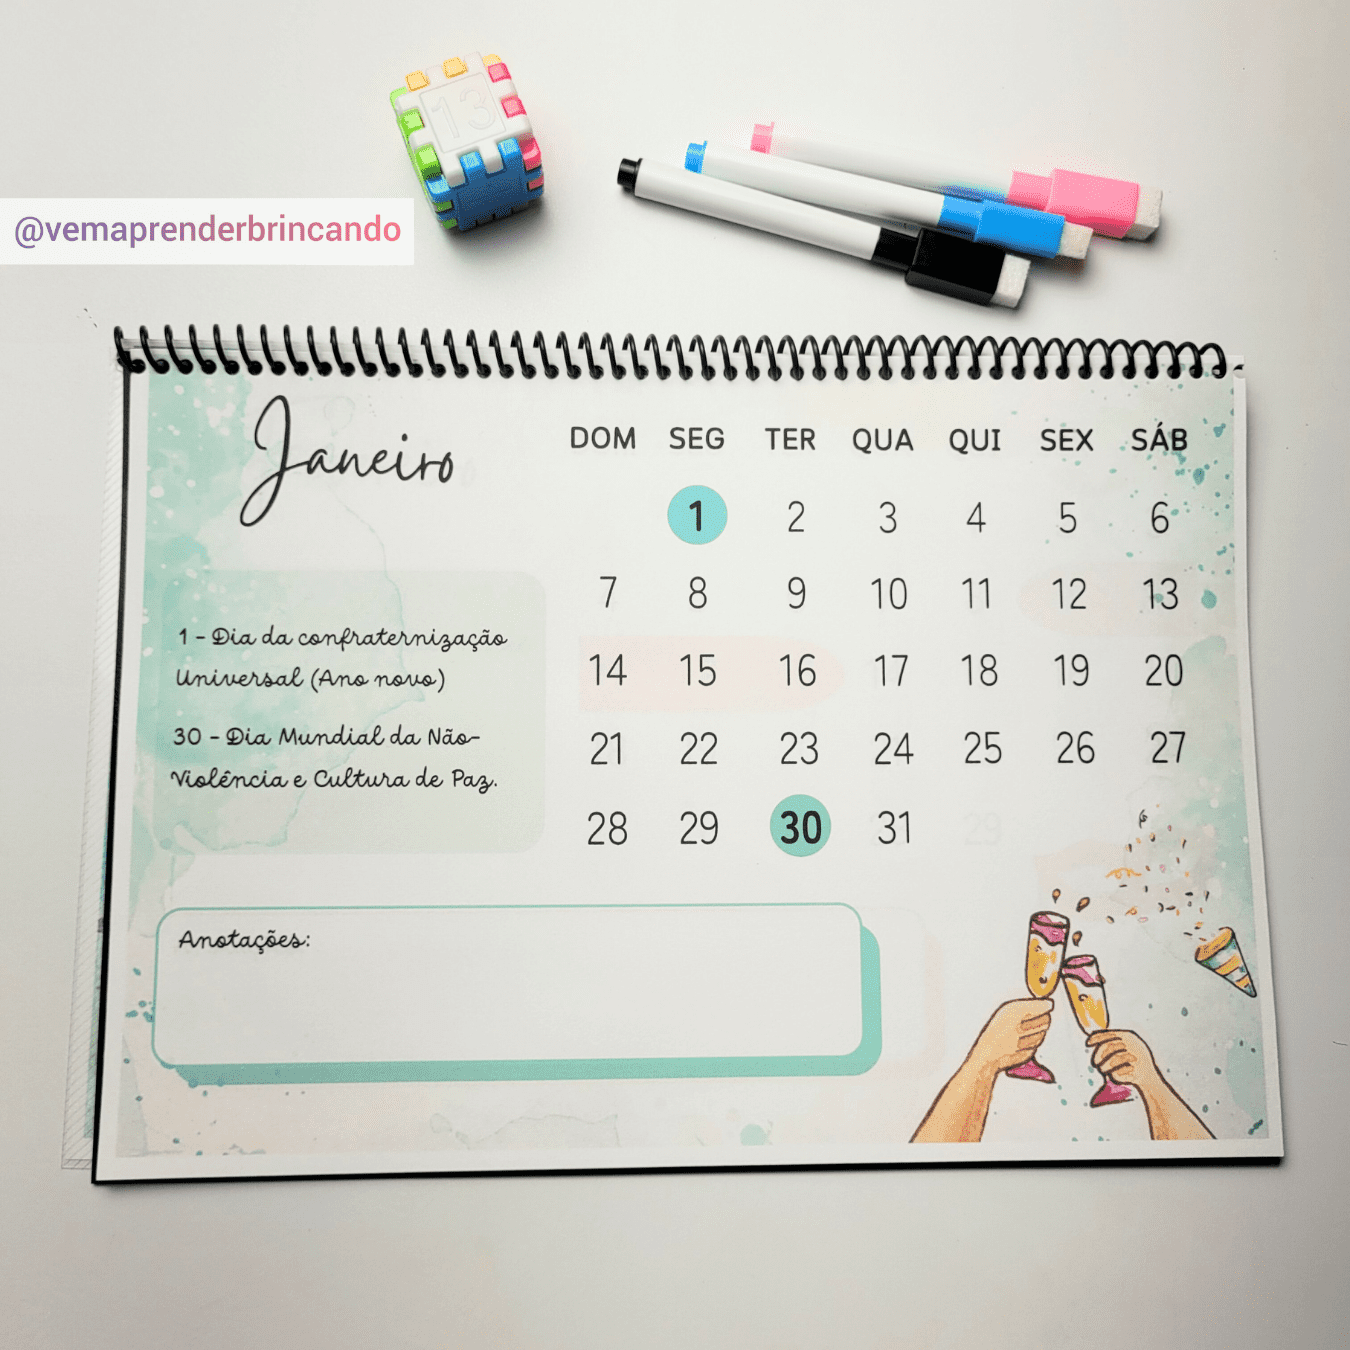 Calendario-Escolar-_datas-comemorativas_-3_1